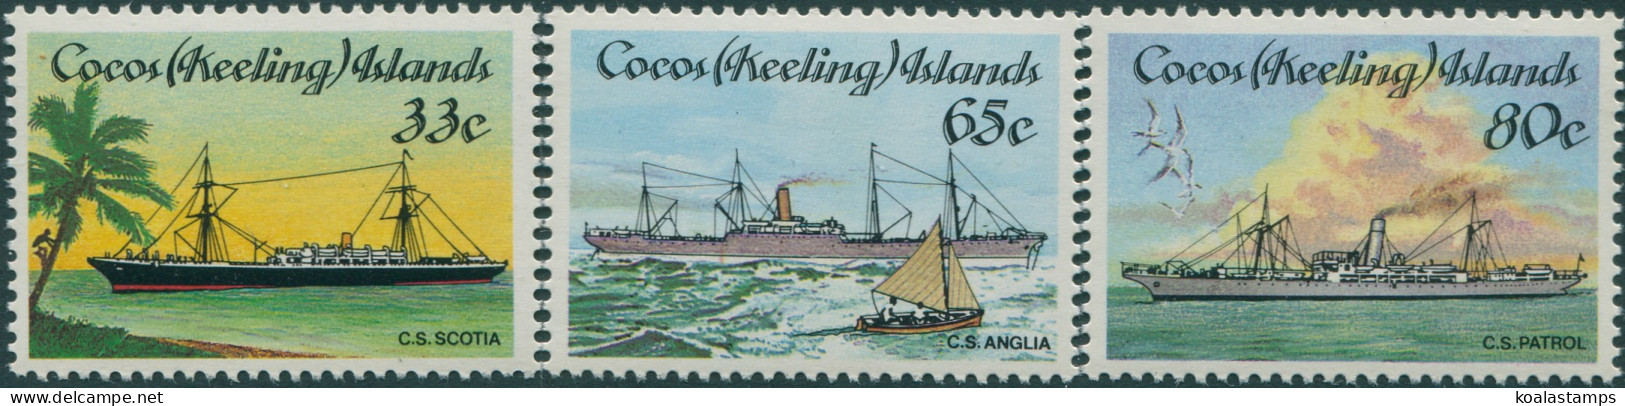 Cocos Islands 1985 SG129-131 Malay Culture Set MNH - Kokosinseln (Keeling Islands)